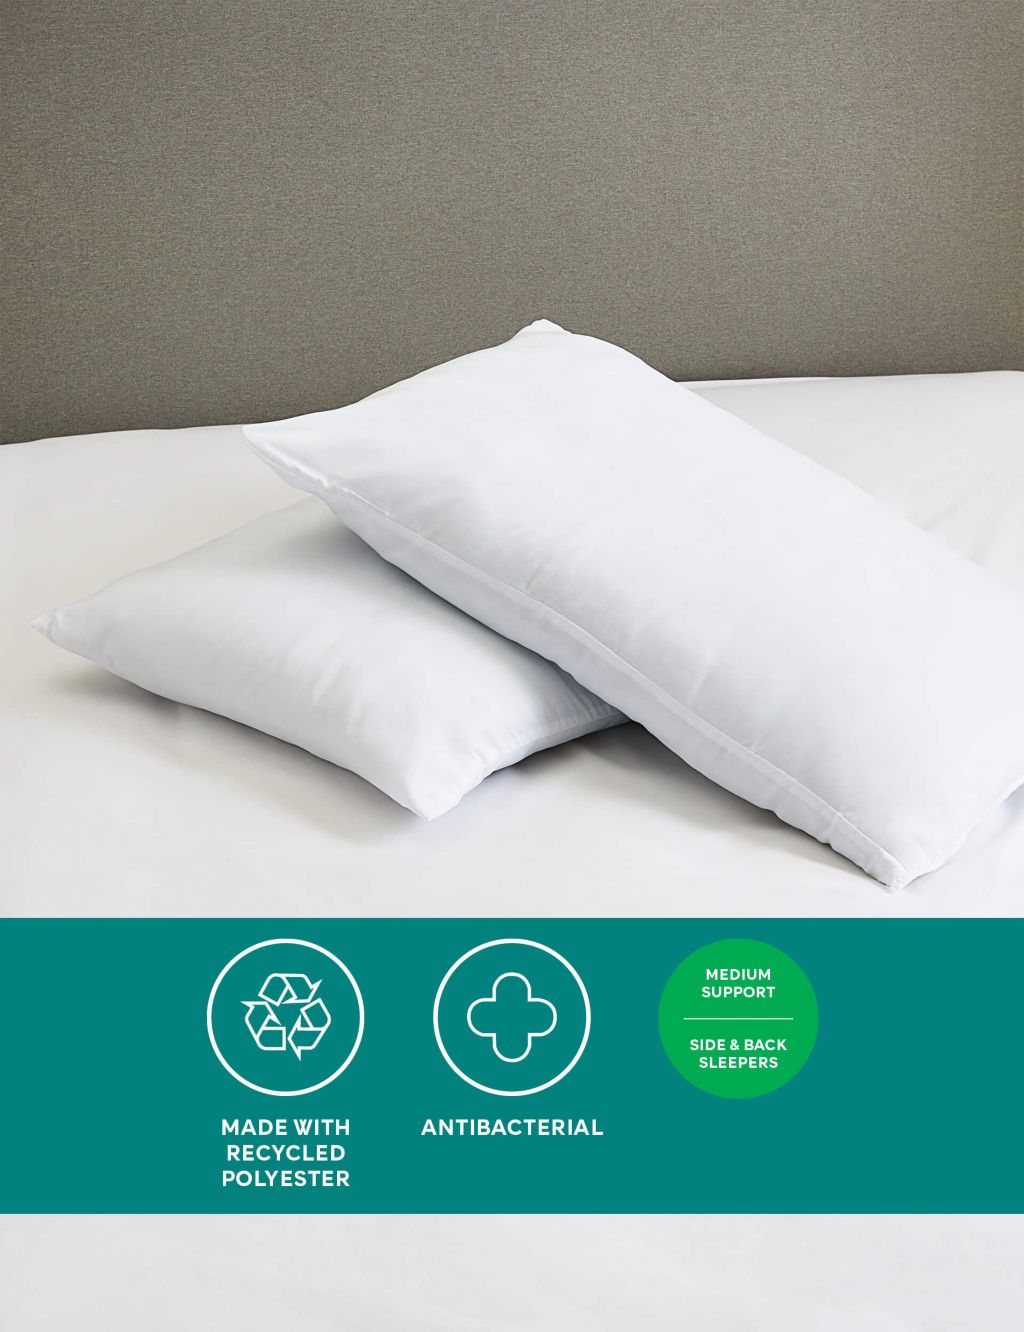 2pk Simply Protect Medium Pillows image 1